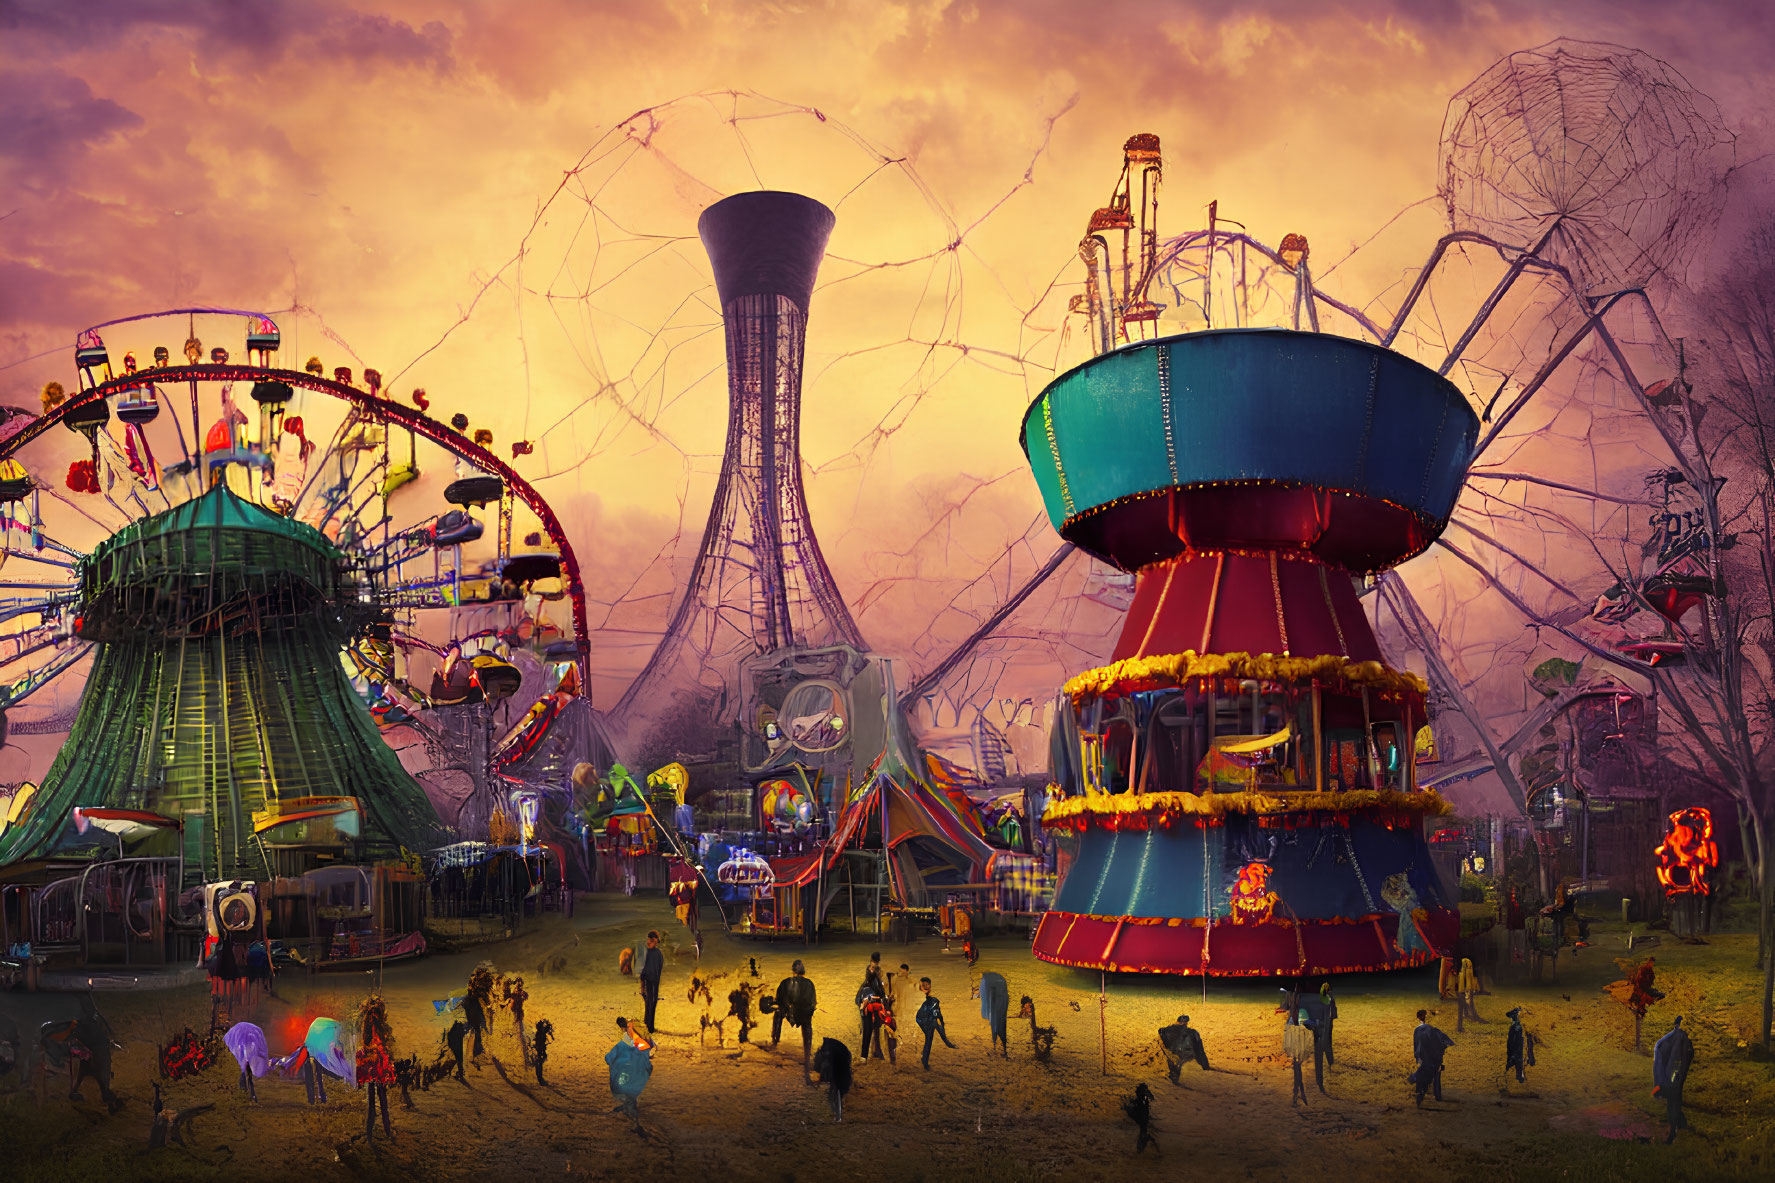 Vibrant amusement rides in atmospheric carnival scene